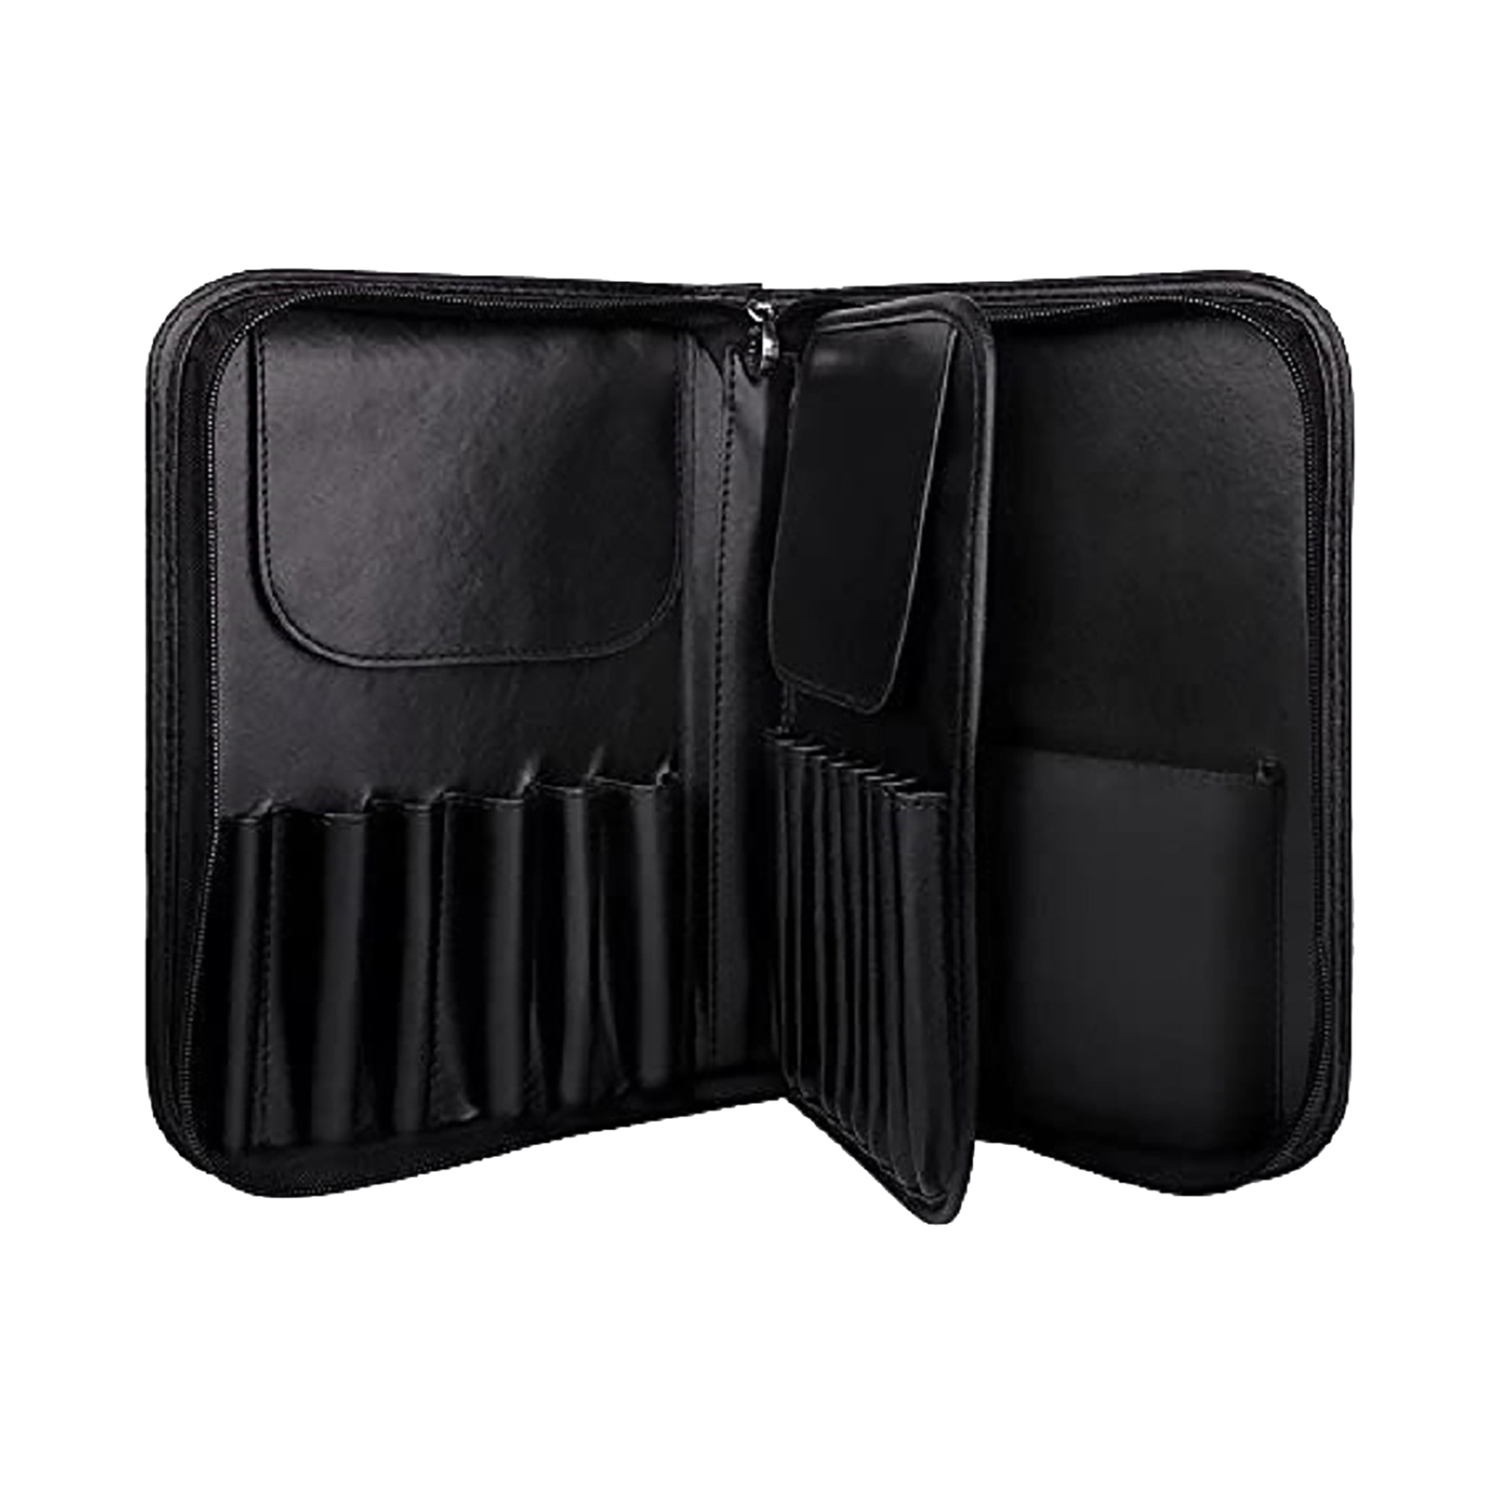 Bronson Professional | Bronson Professional Makeup Brush Handbag Multi Compartment Organizer Storage Case - Black